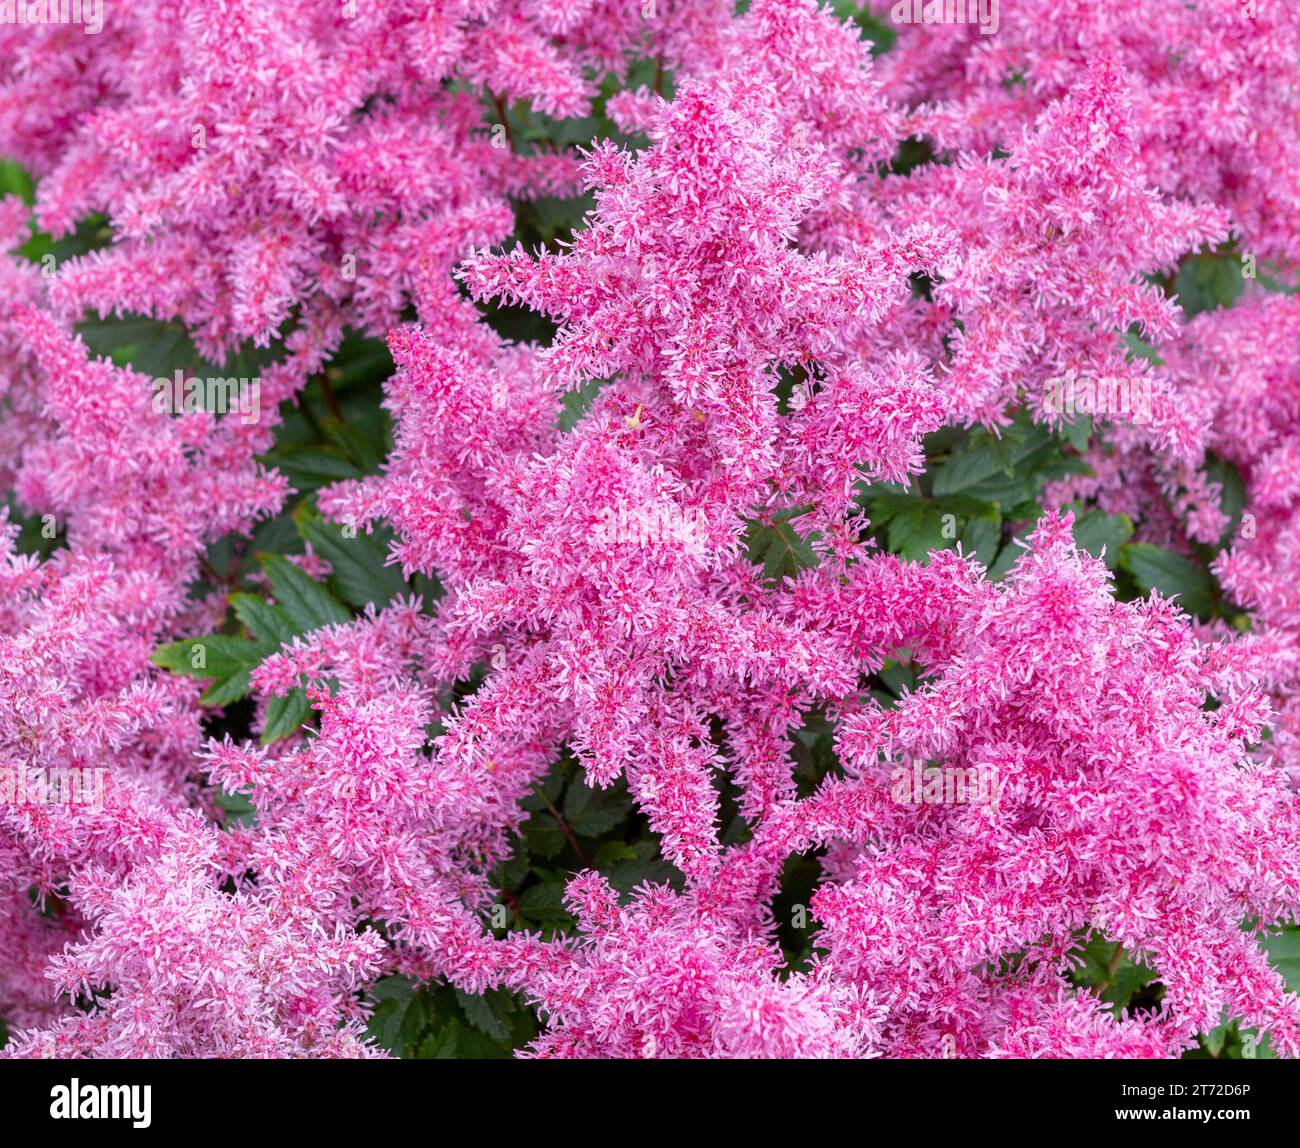 Hintergrund der rosa Blume. Astilba rosa Blumen, Nahaufnahme. Naturbegriff. Stockfoto